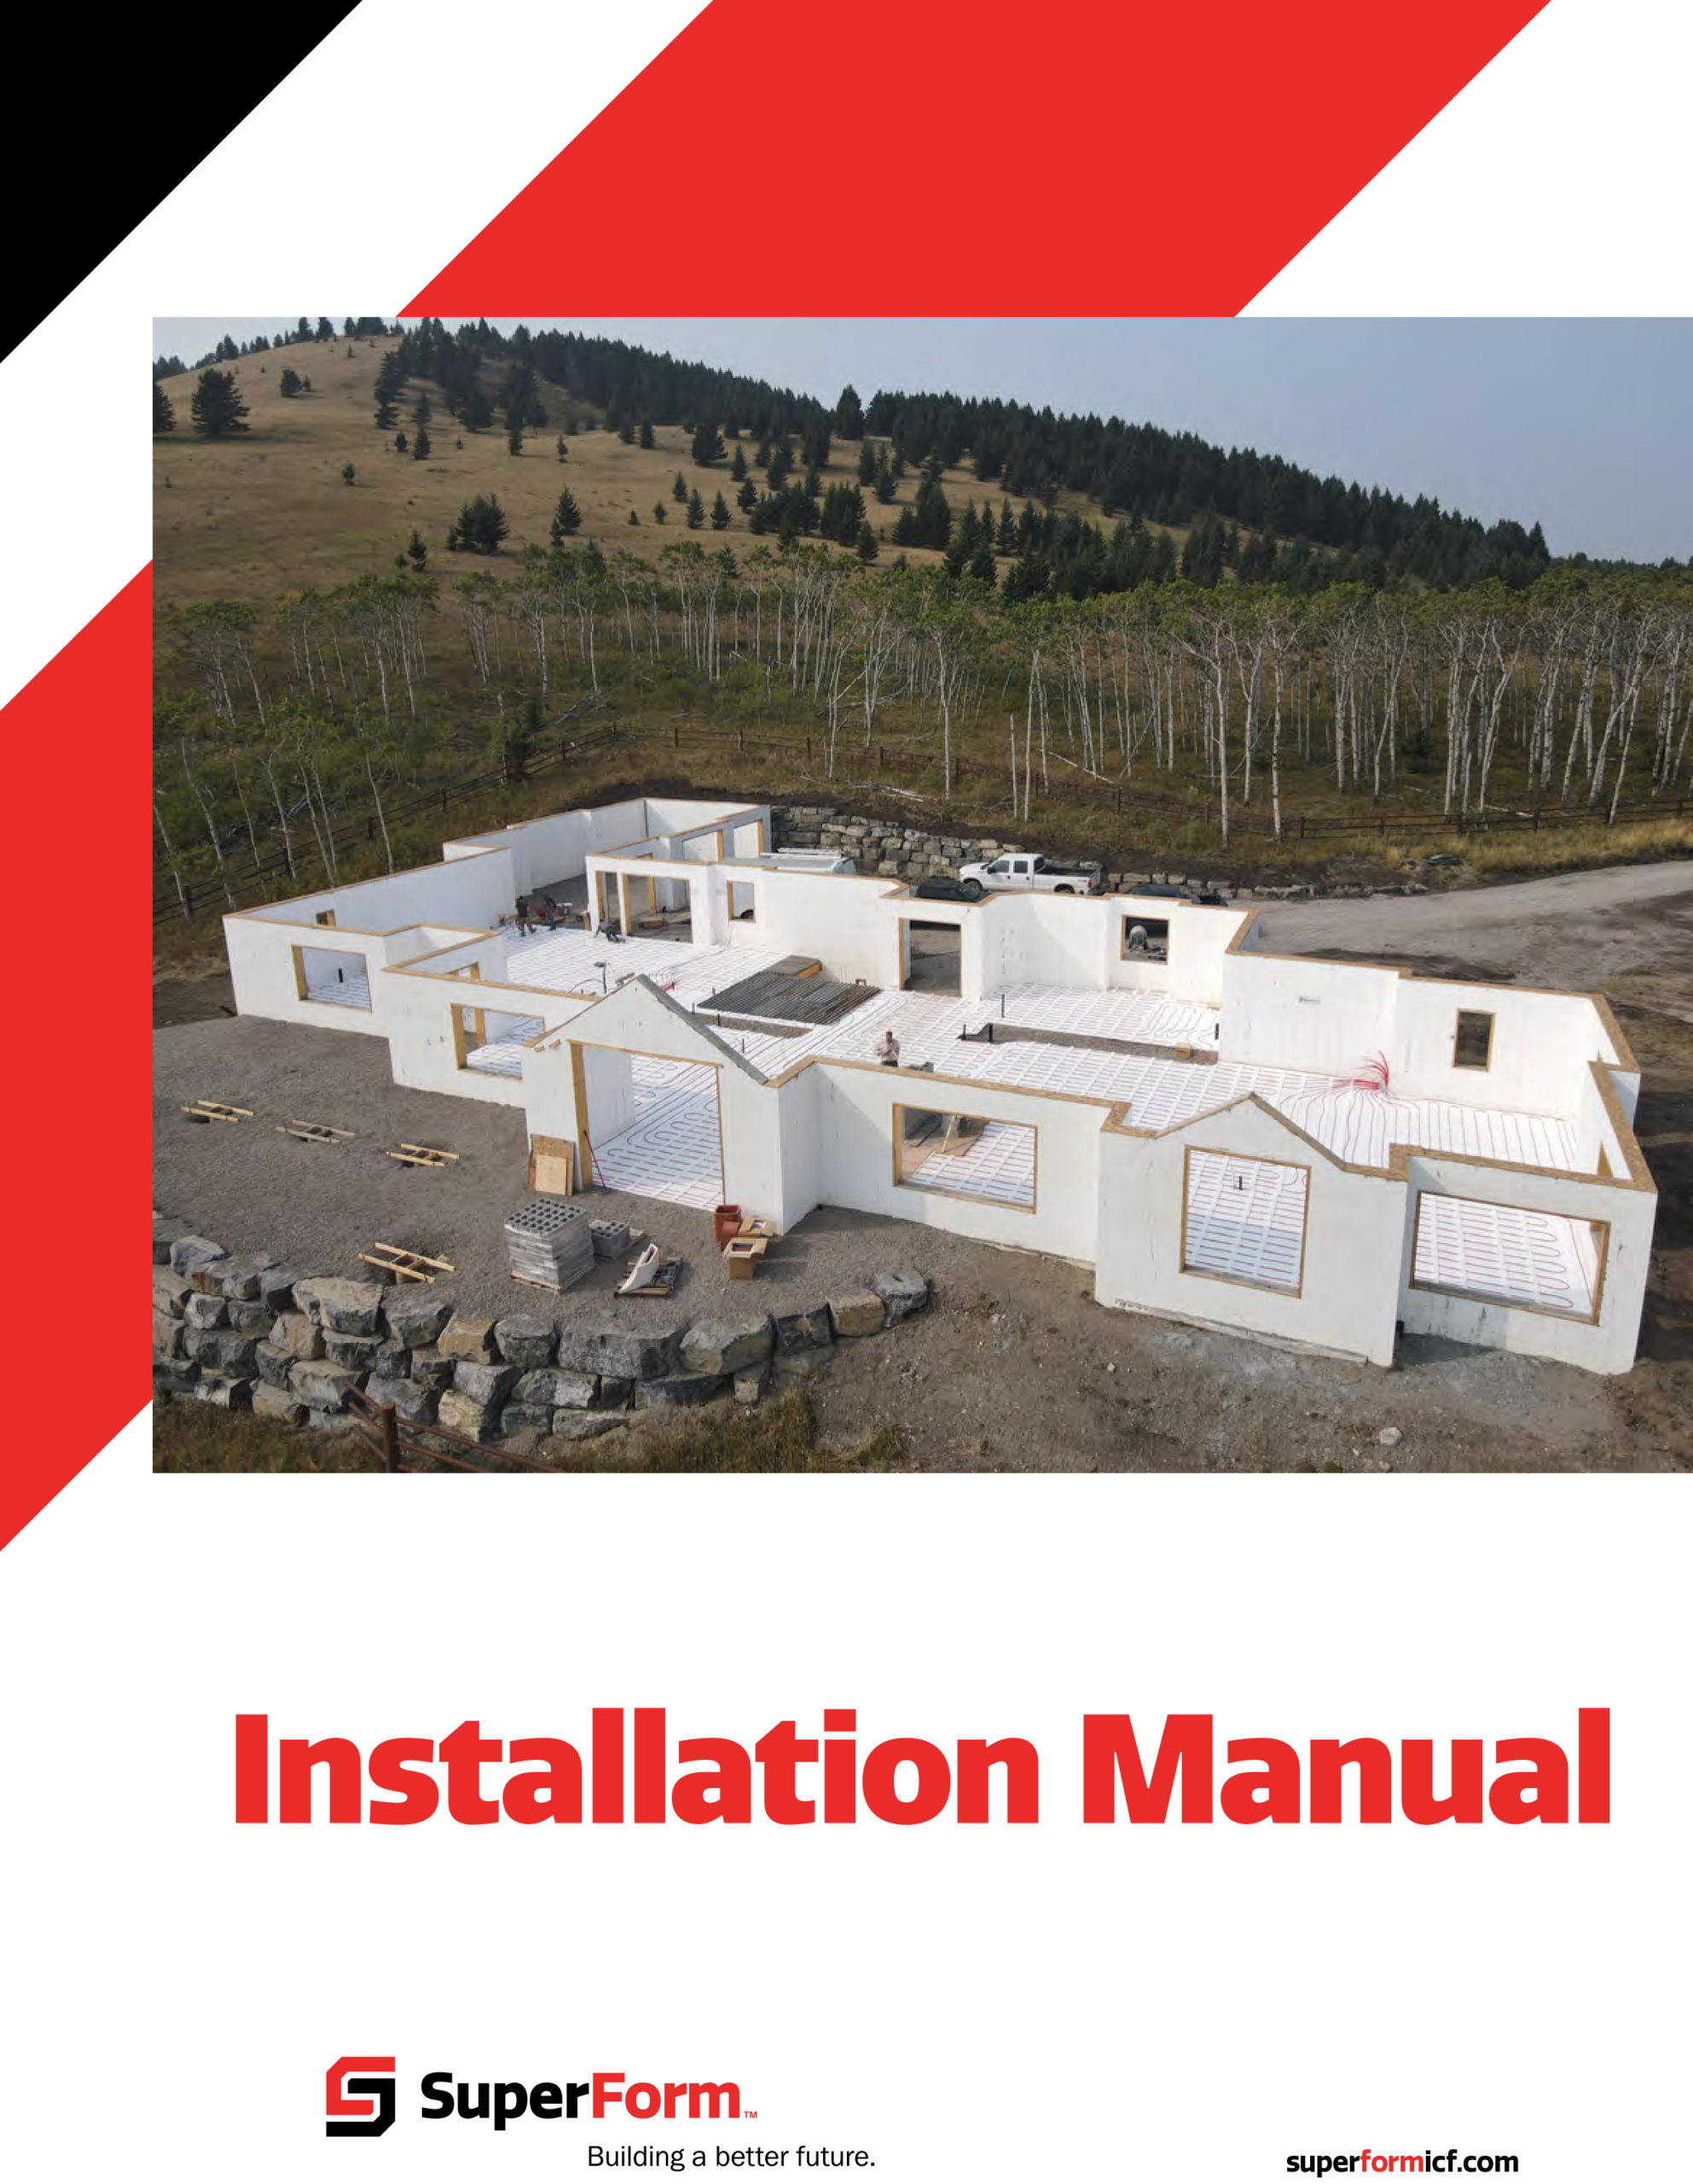 SuperForm_Installation Manual_100721_FINAL_Digital_reducedsize-1_frontcover